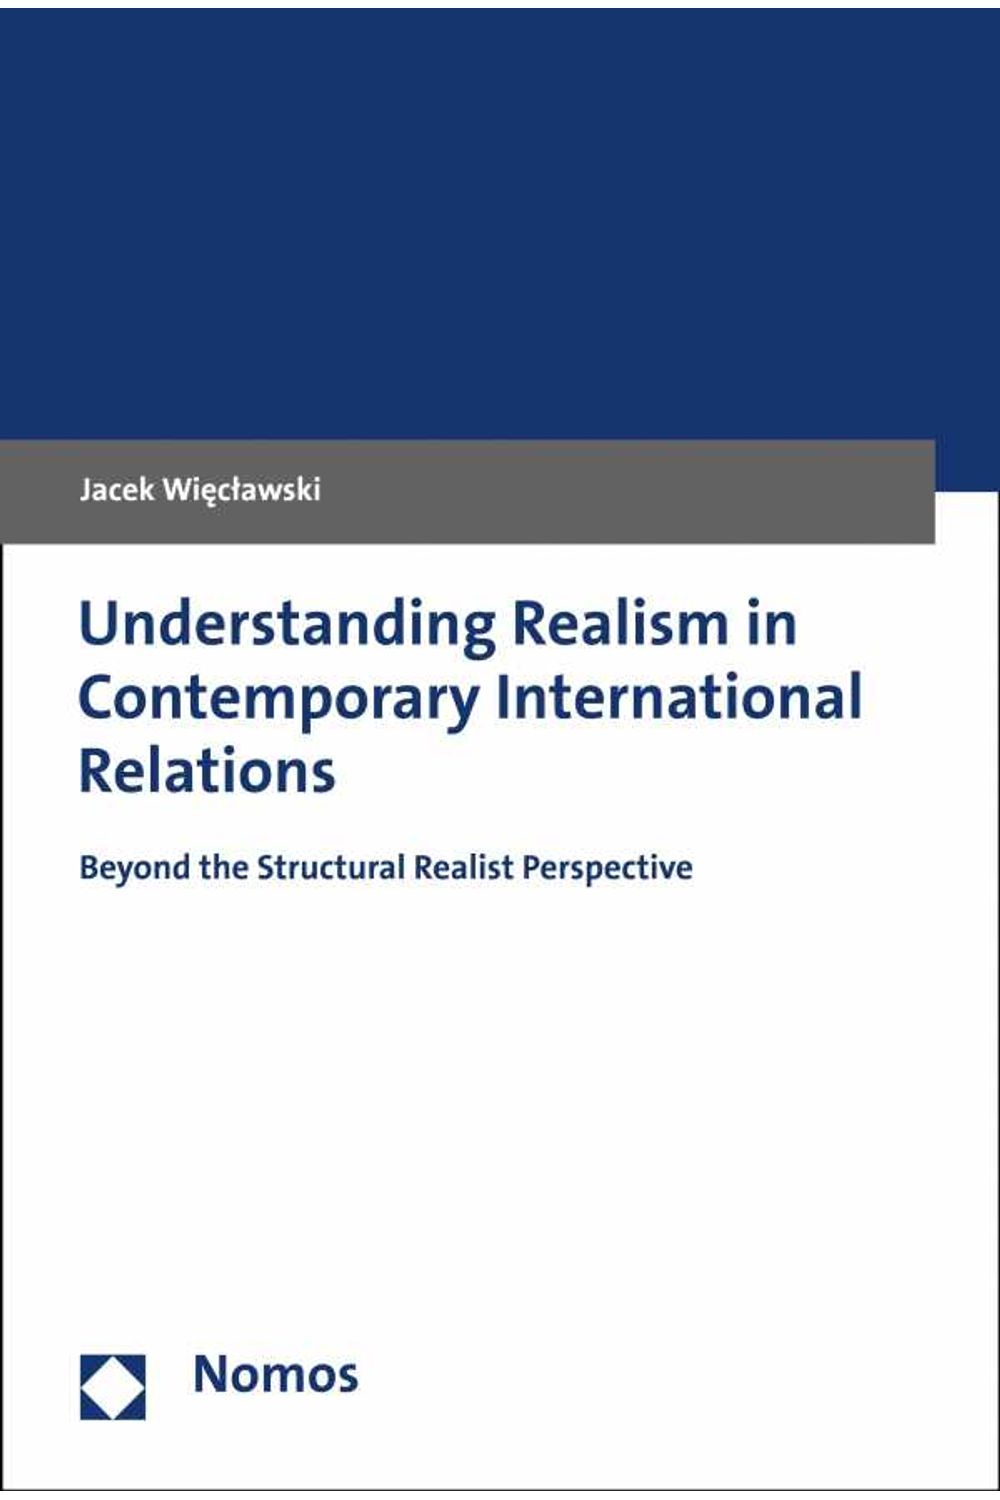 bw-understanding-realism-in-contemporary-international-relations-nomos-verlag-9783845298757